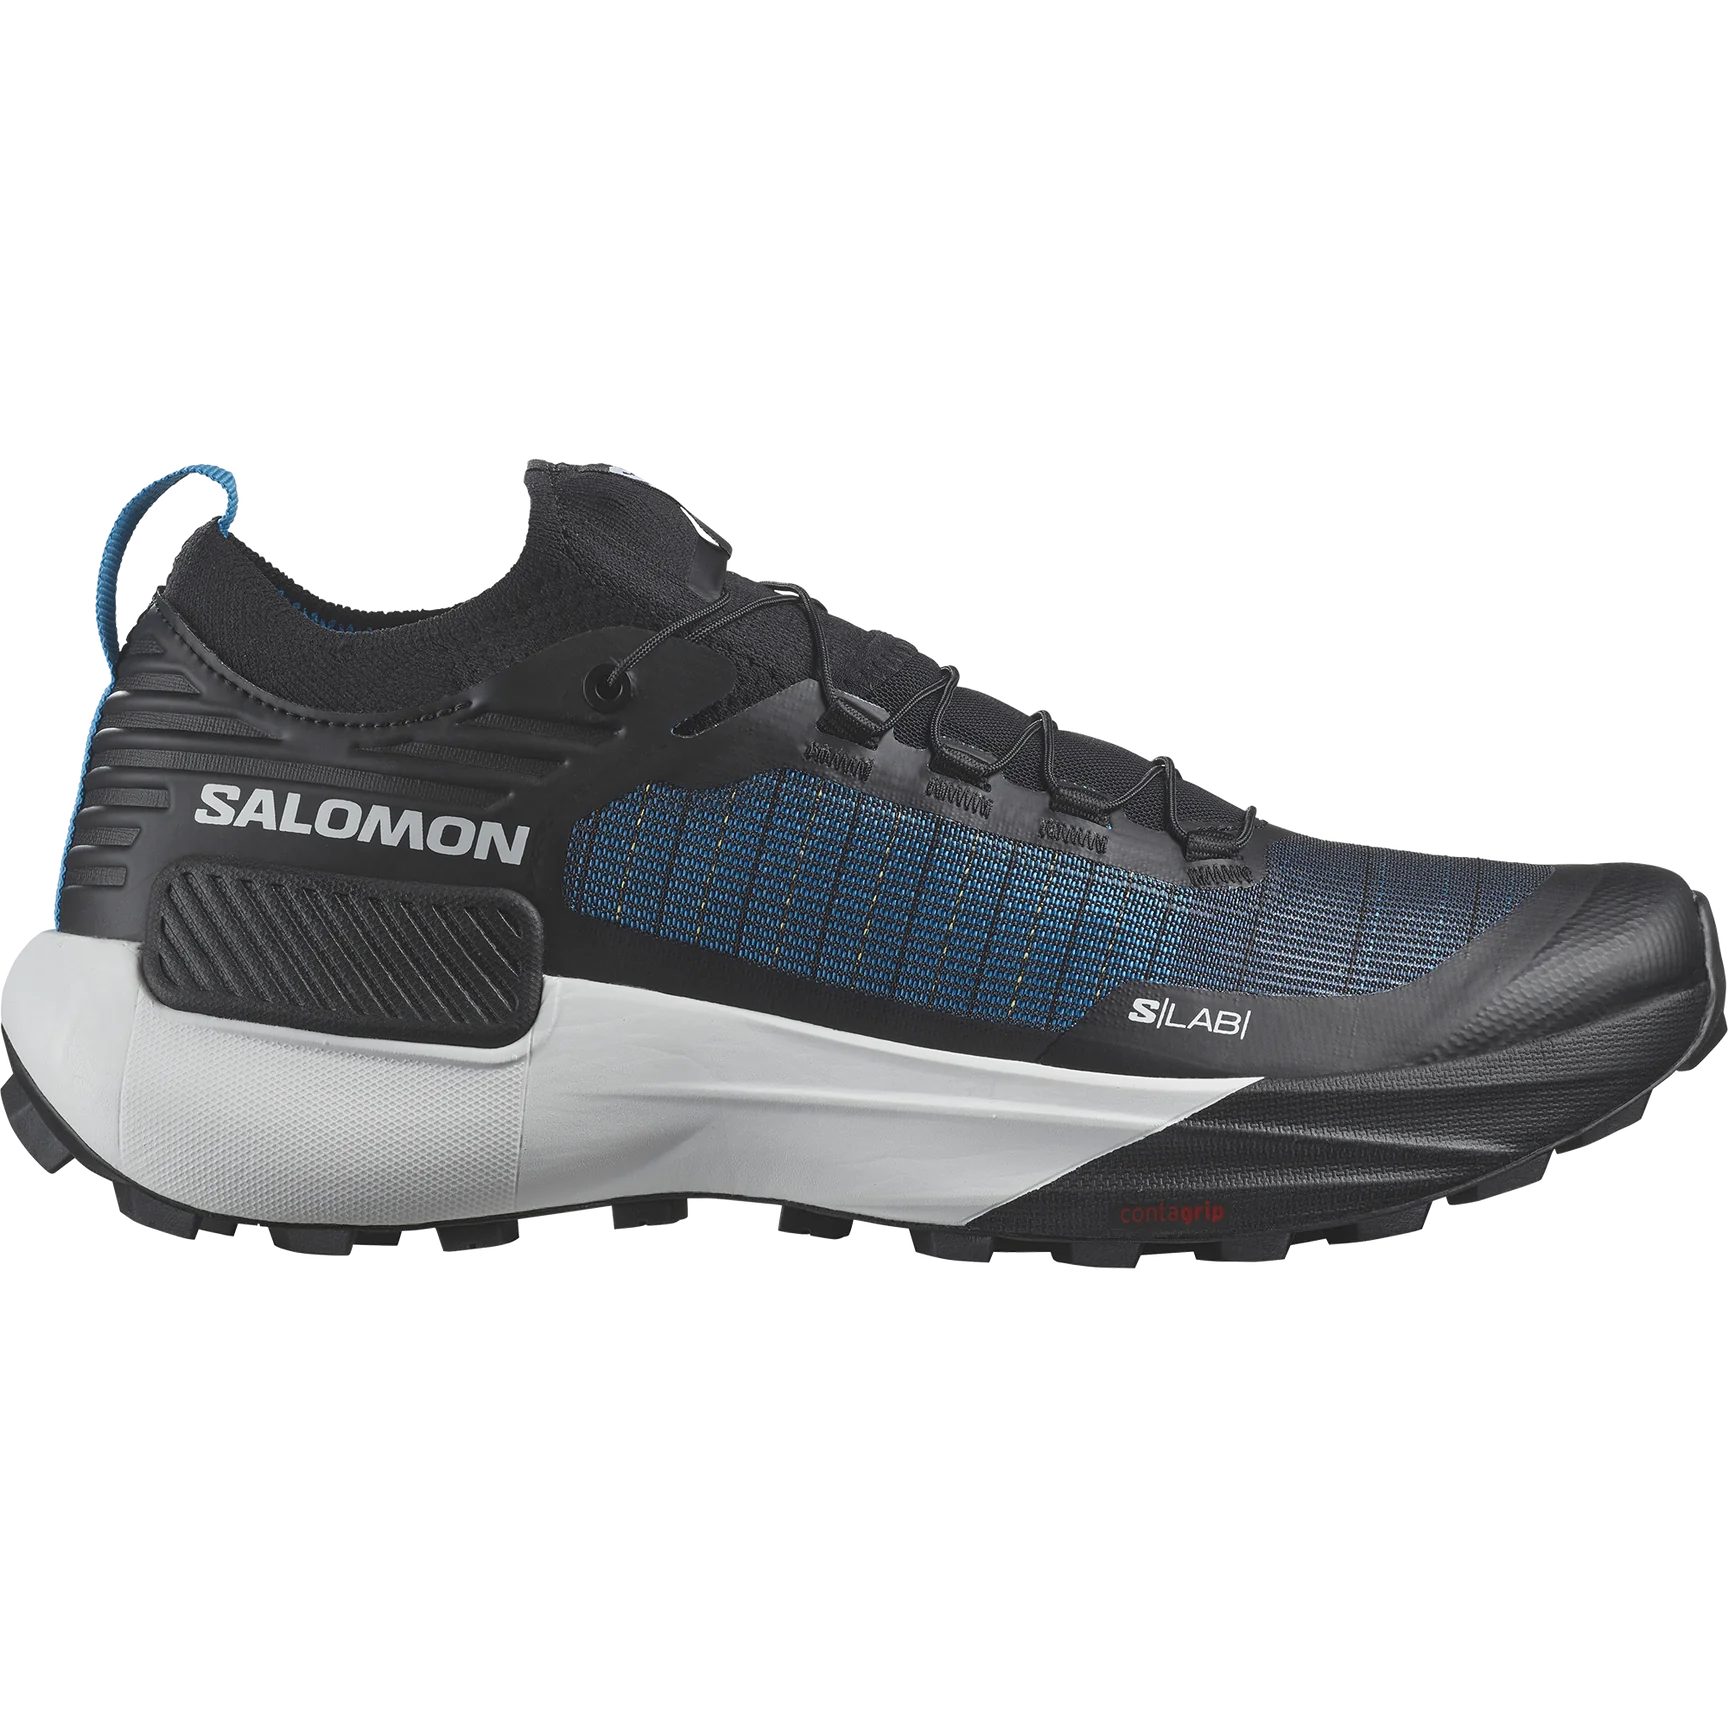 Salomon S/LAB Genesis Shoe (Unisex) - Black/White/Blue Danube - Find Your Feet Australia Hobart Launceston Tasmania